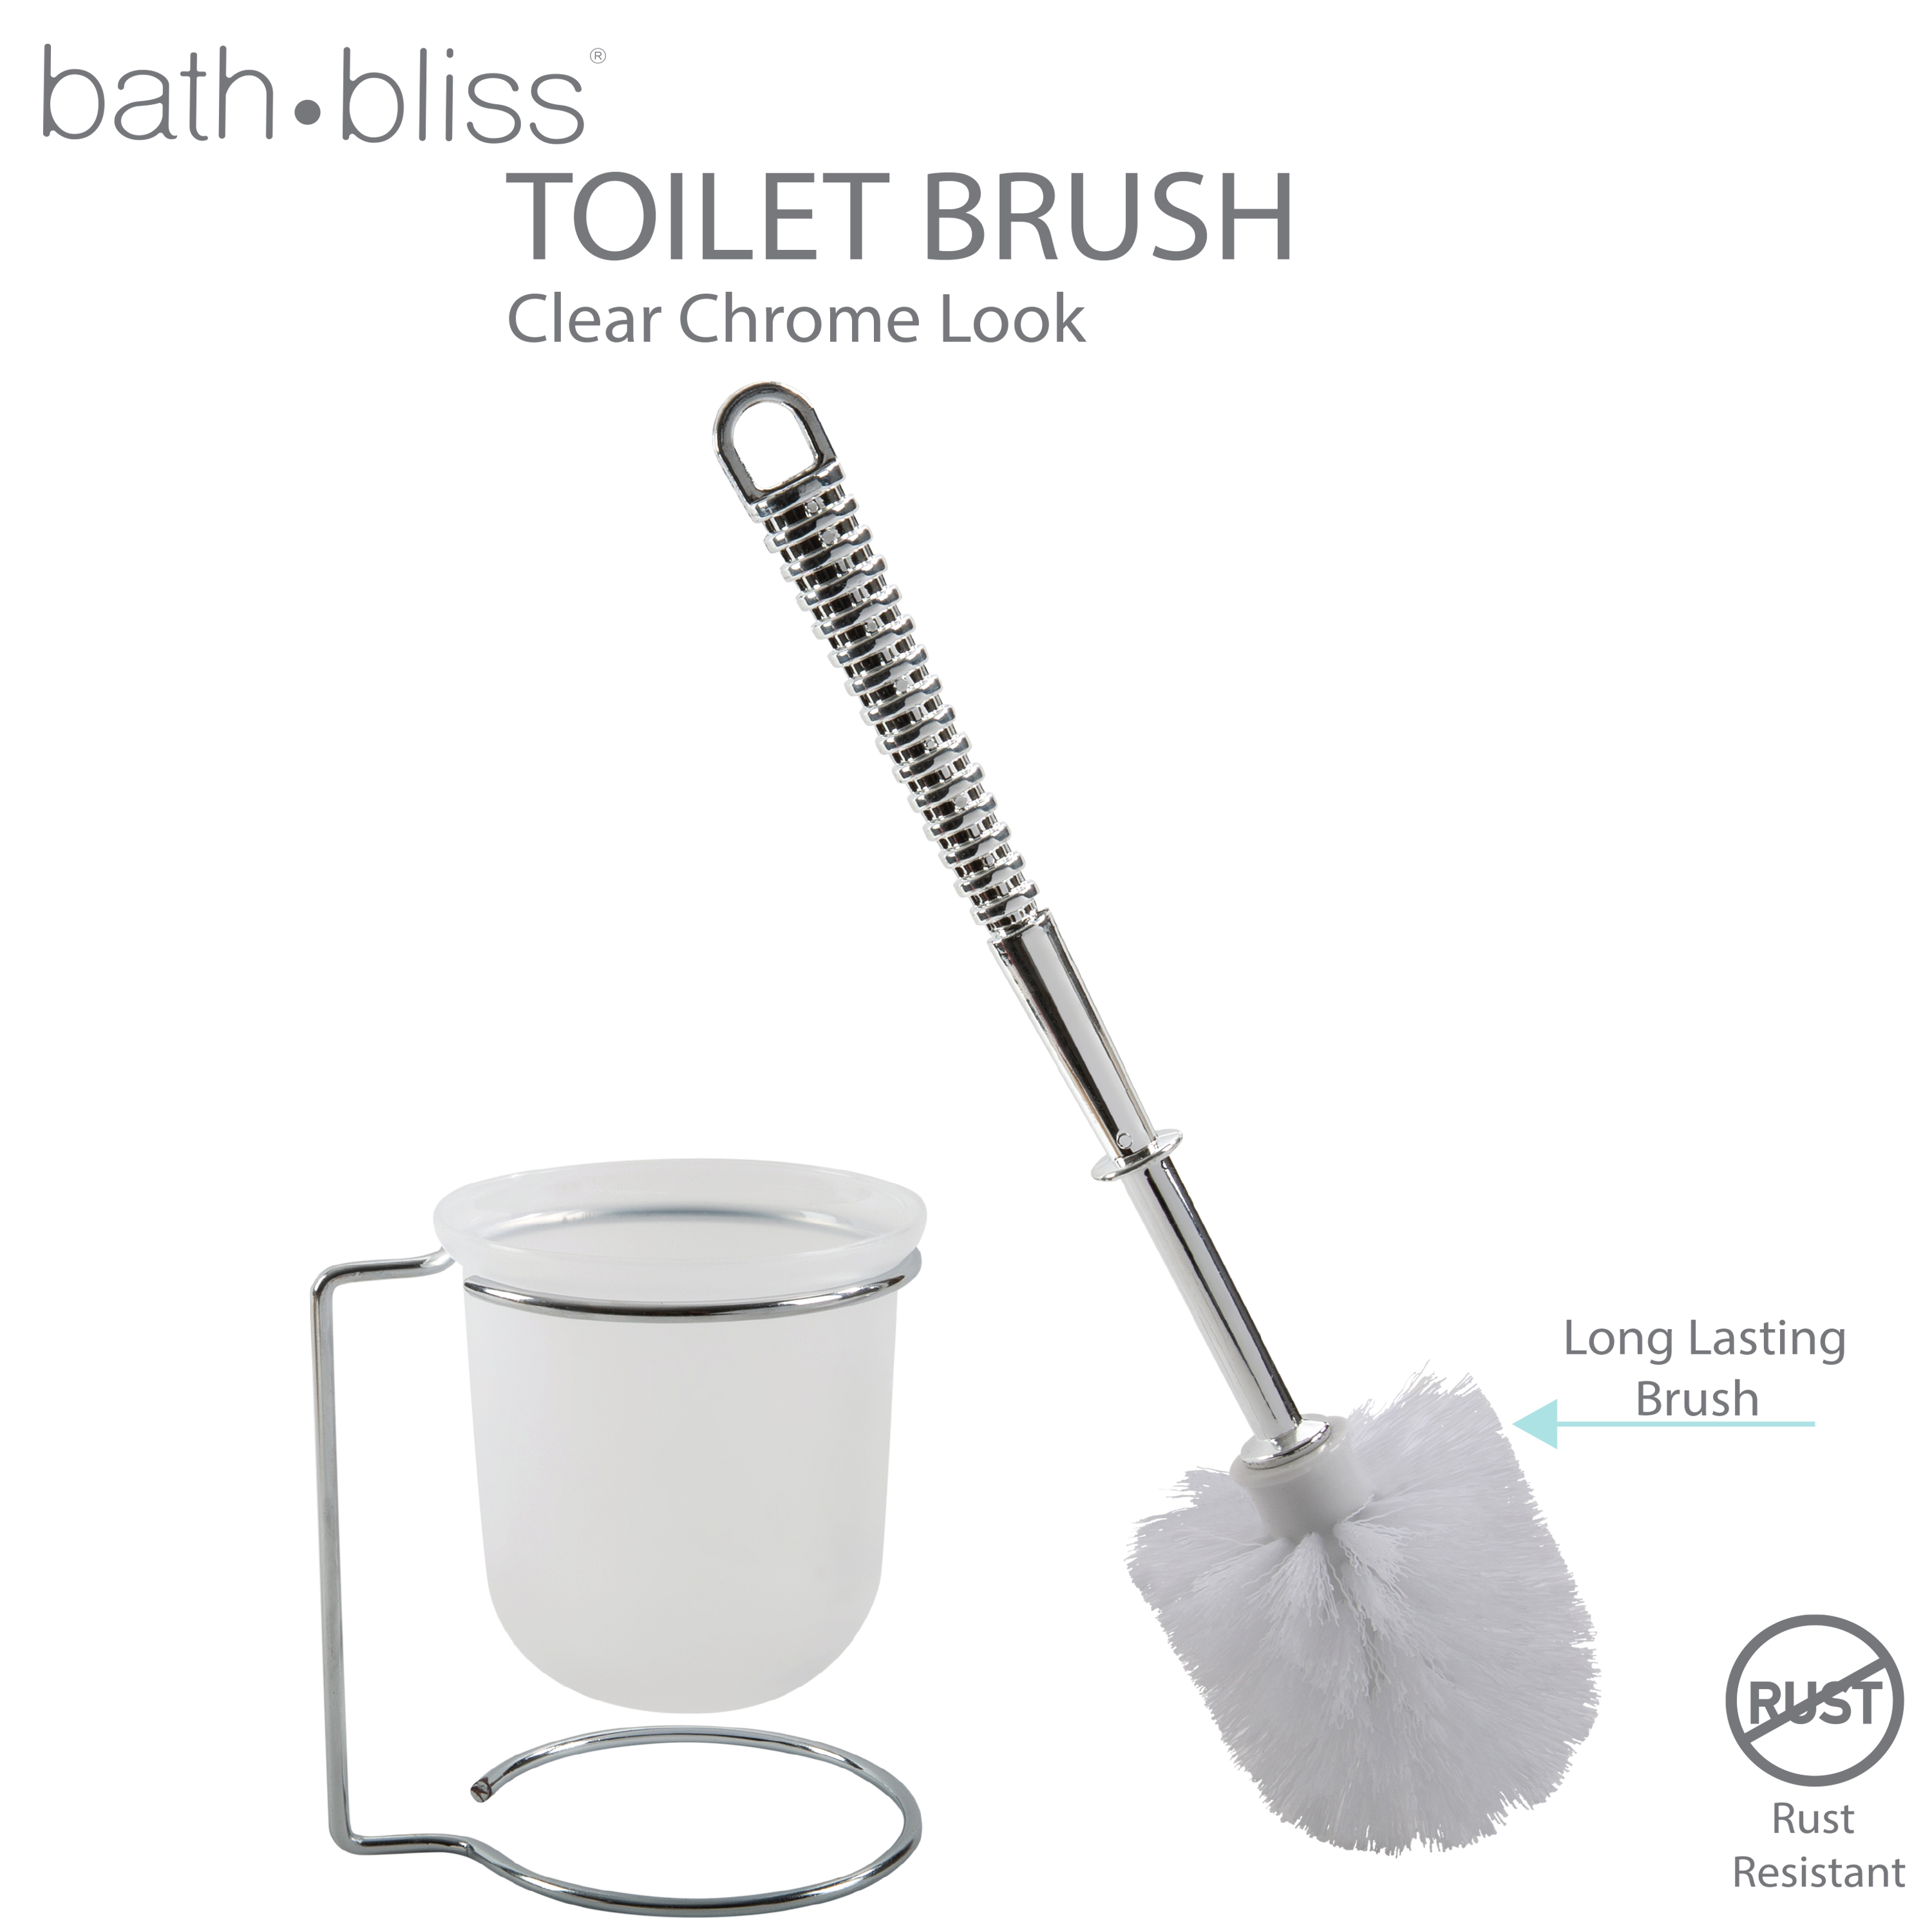 Bath Bliss Steel Toilet Brush and Holder in Chrome - image 3 of 8